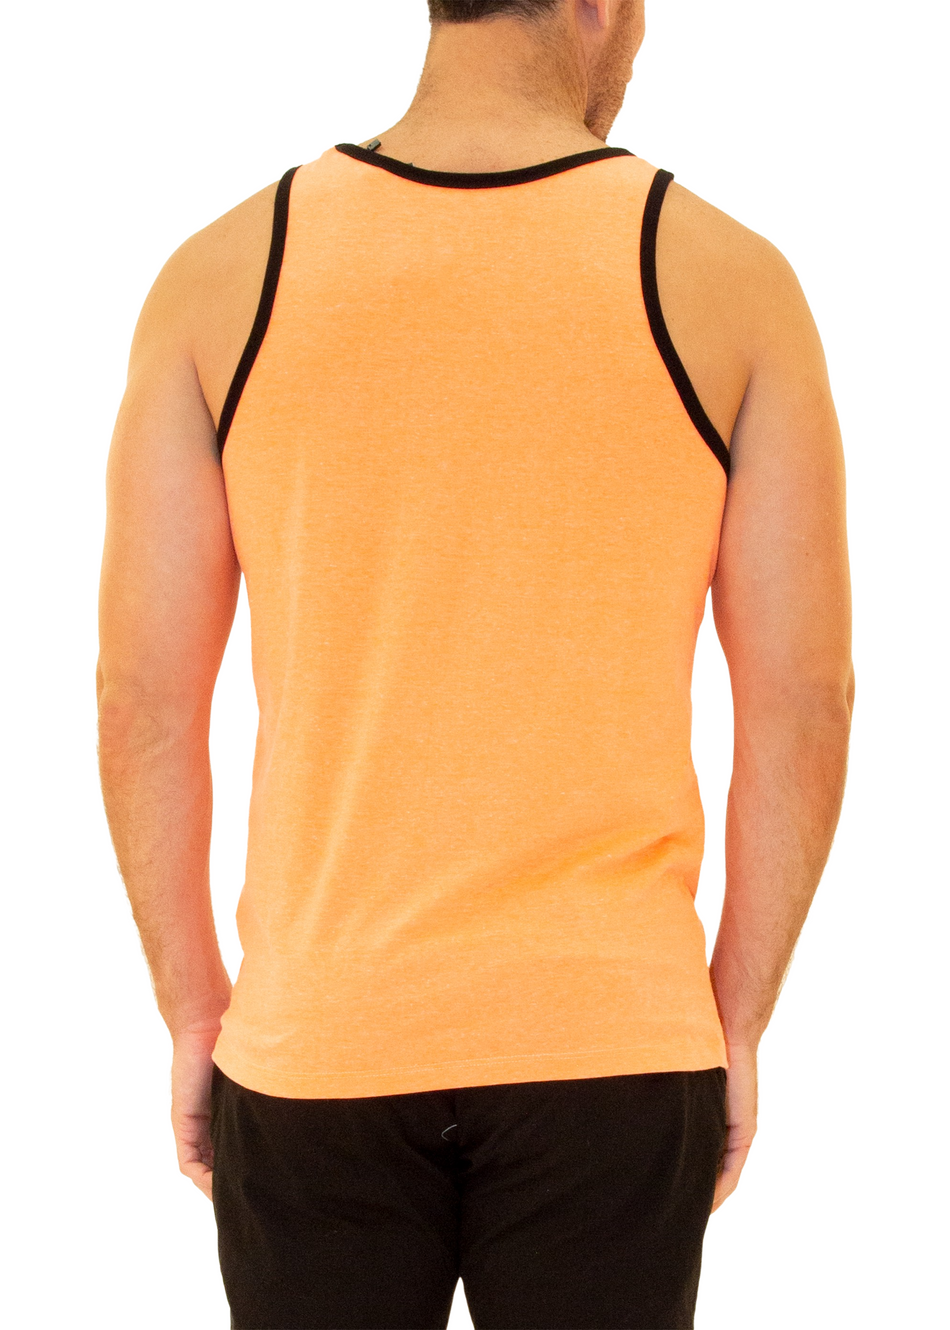 201023 - Men's Neon Orange Cotton Tank Top